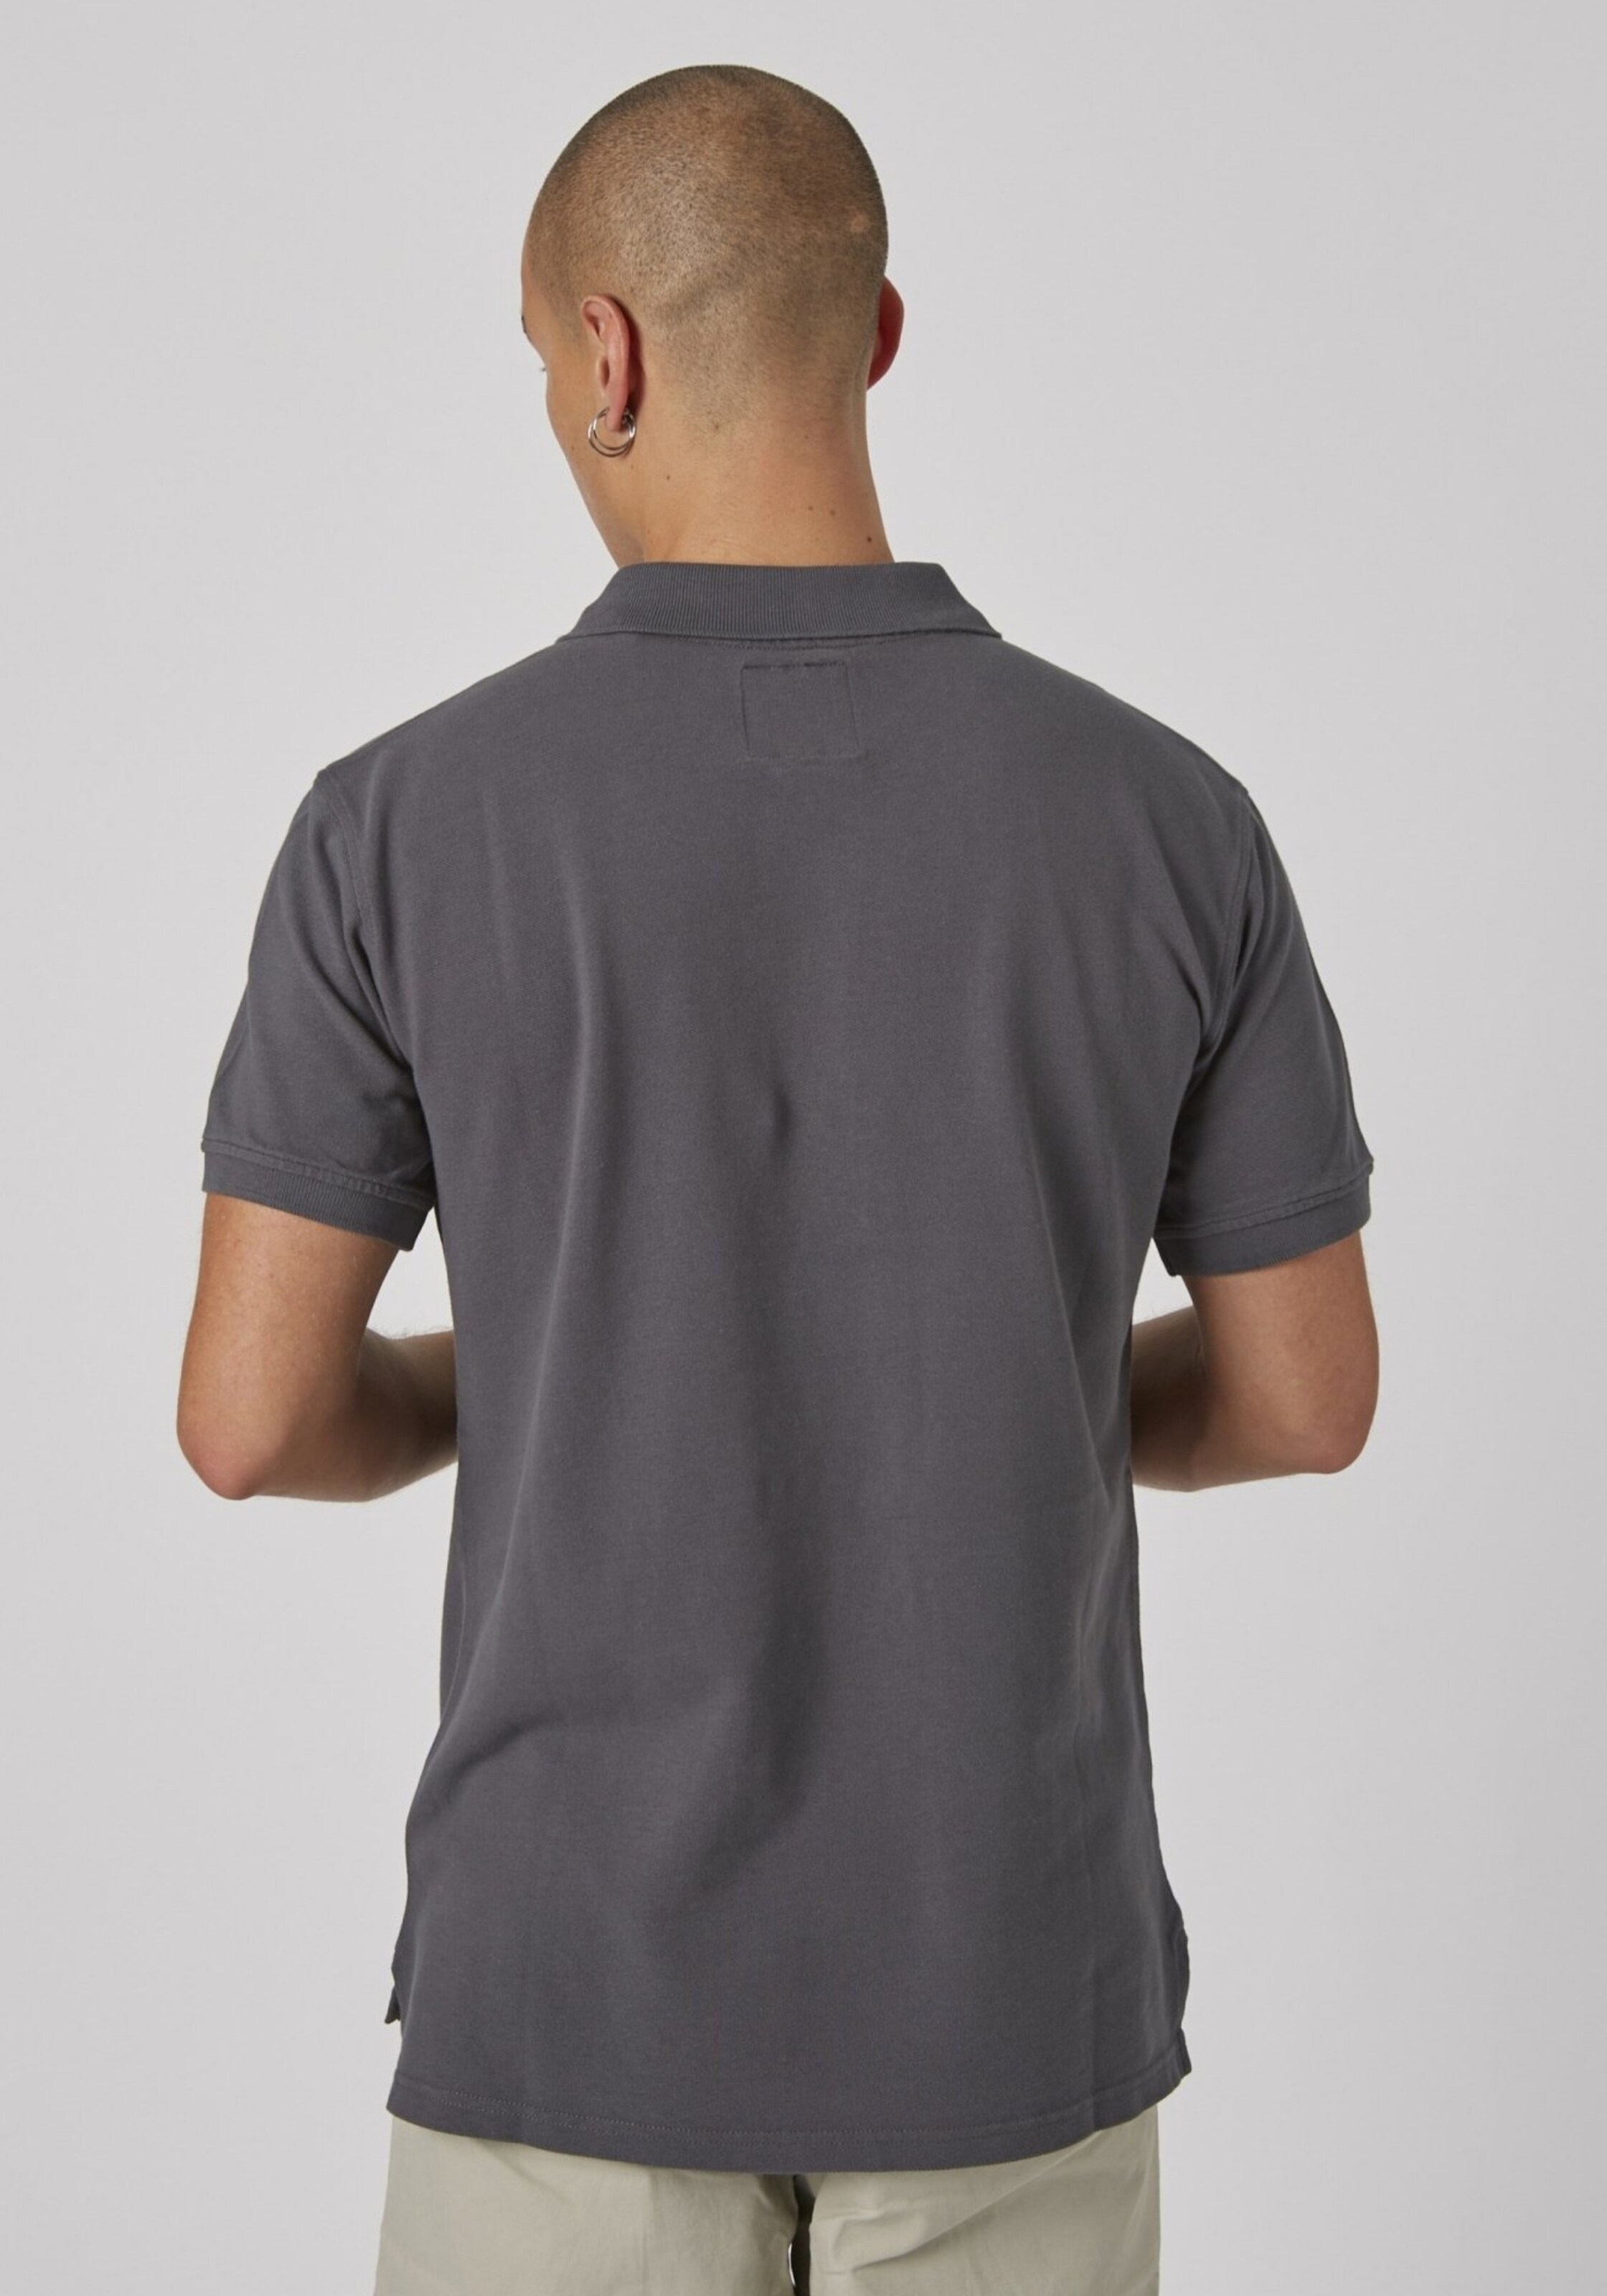 Männer Shirts THAT GORILLA BRAND Polo Shirt 'Virunga' in Grau, Dunkelgrau - LG97332